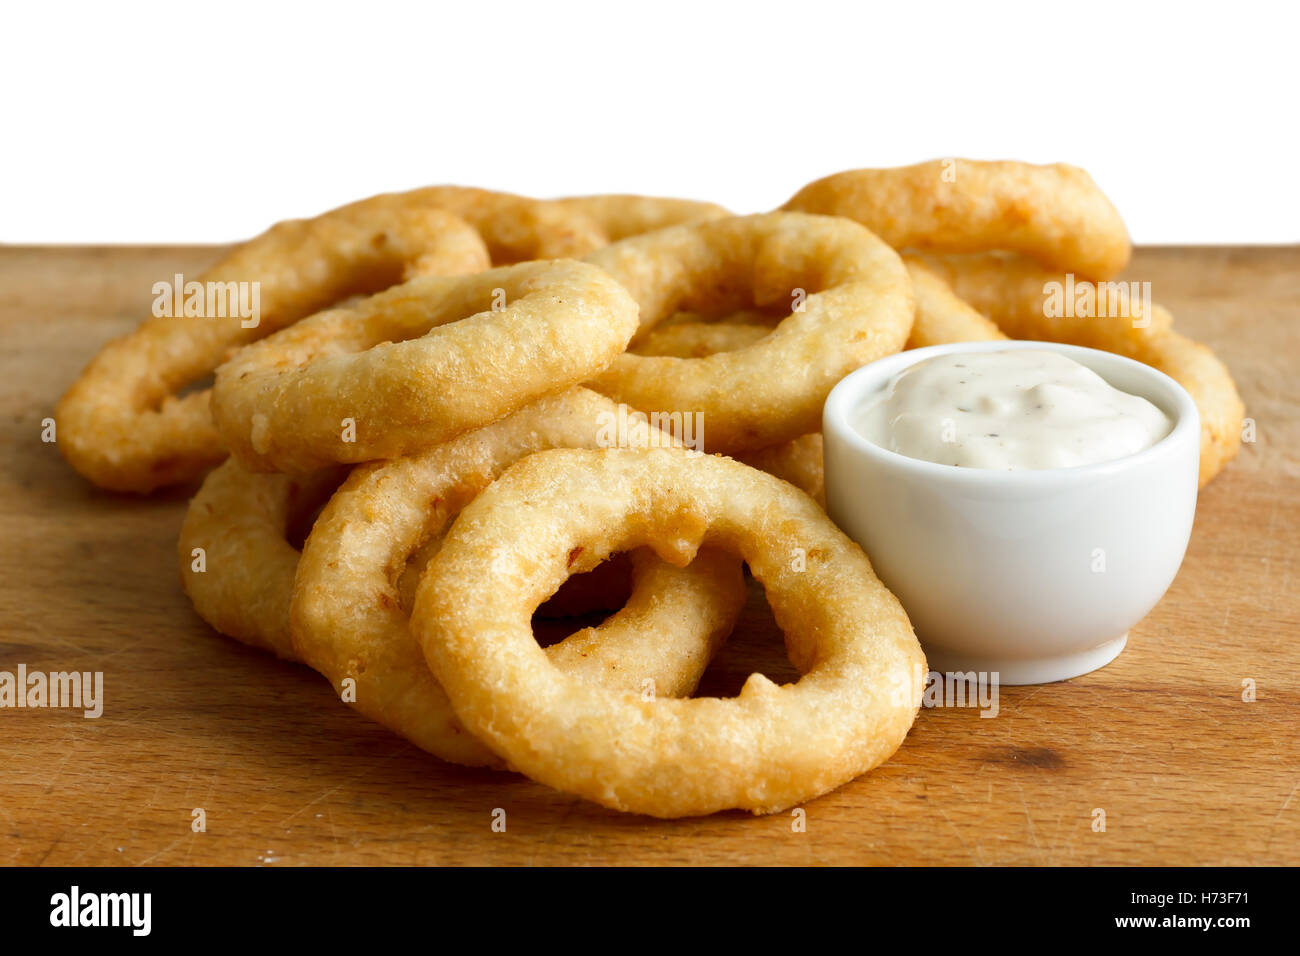 Heap of deep fried onion or calamari rings with garlic mayonnaise dip on wood board. Stock Photo